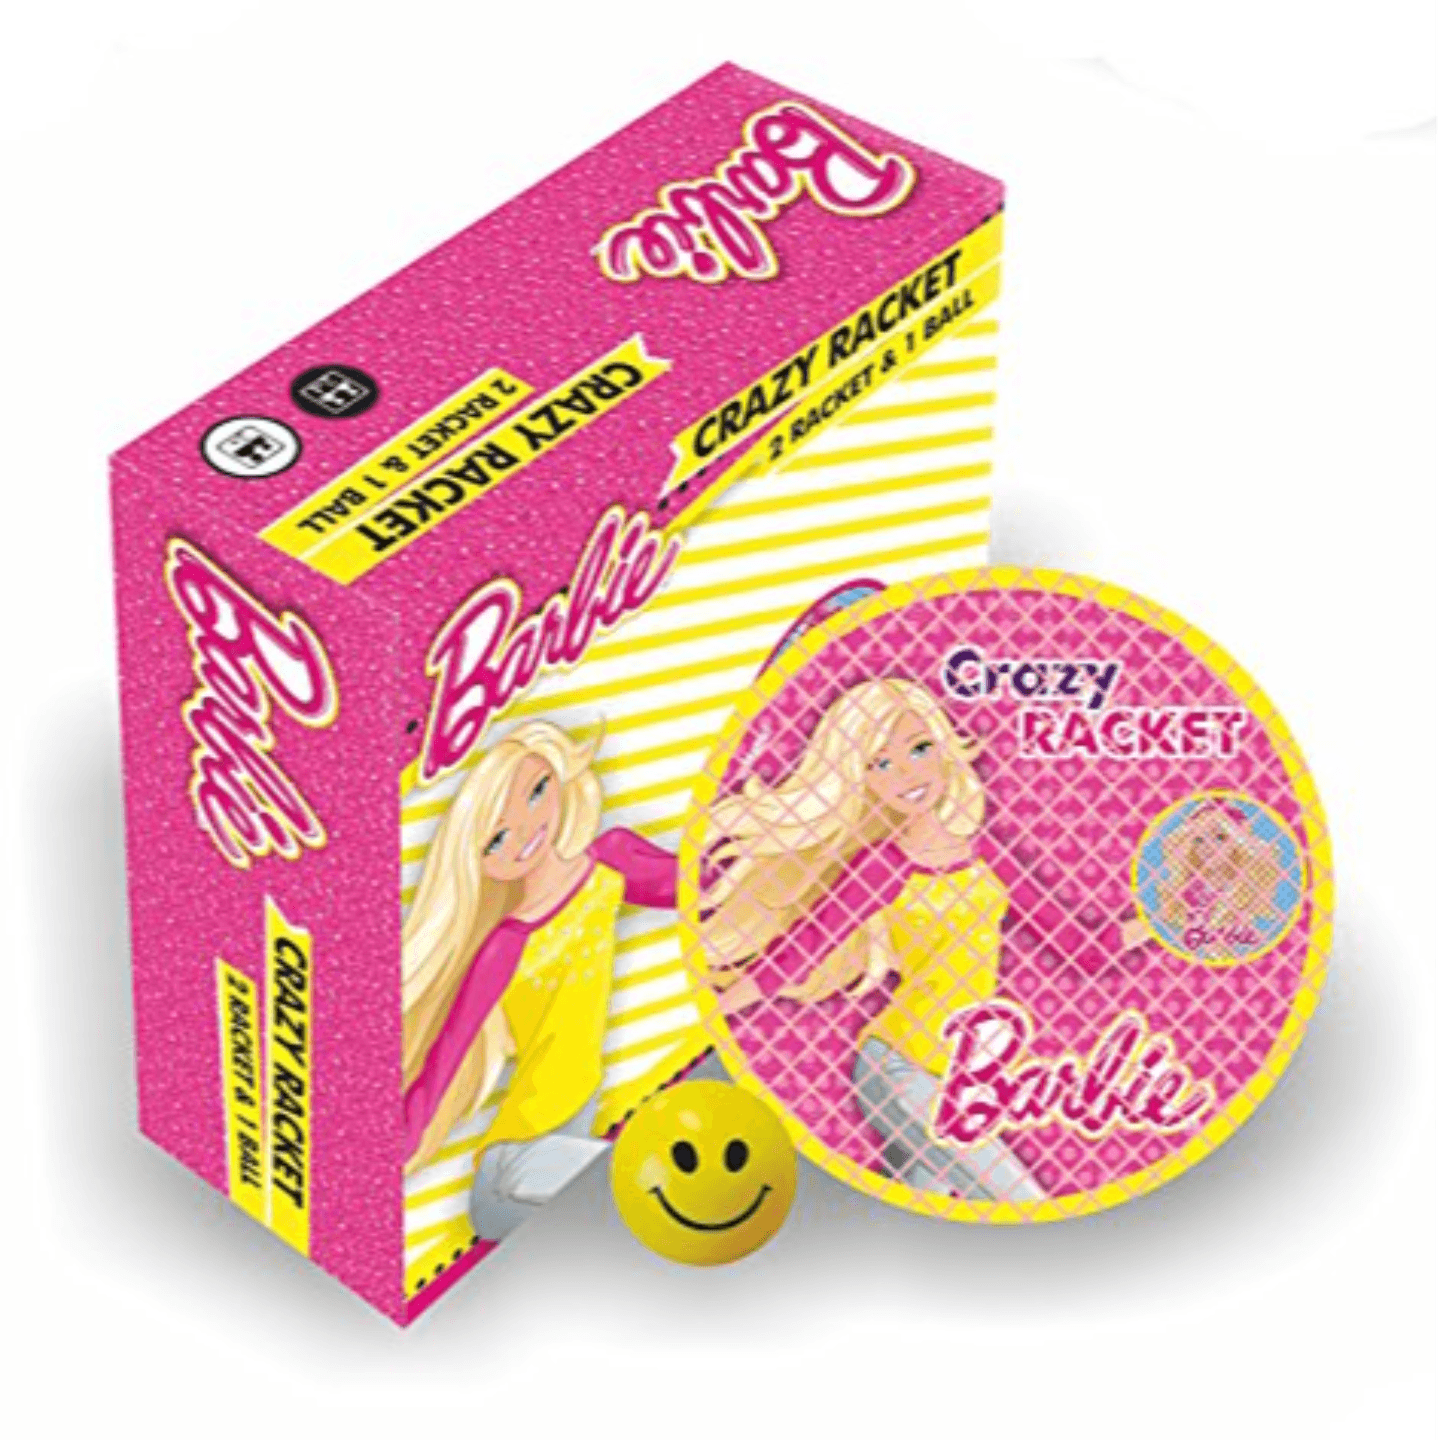 Barbie Pinktastic crazy racket set (2 Rackets and 1 ball)